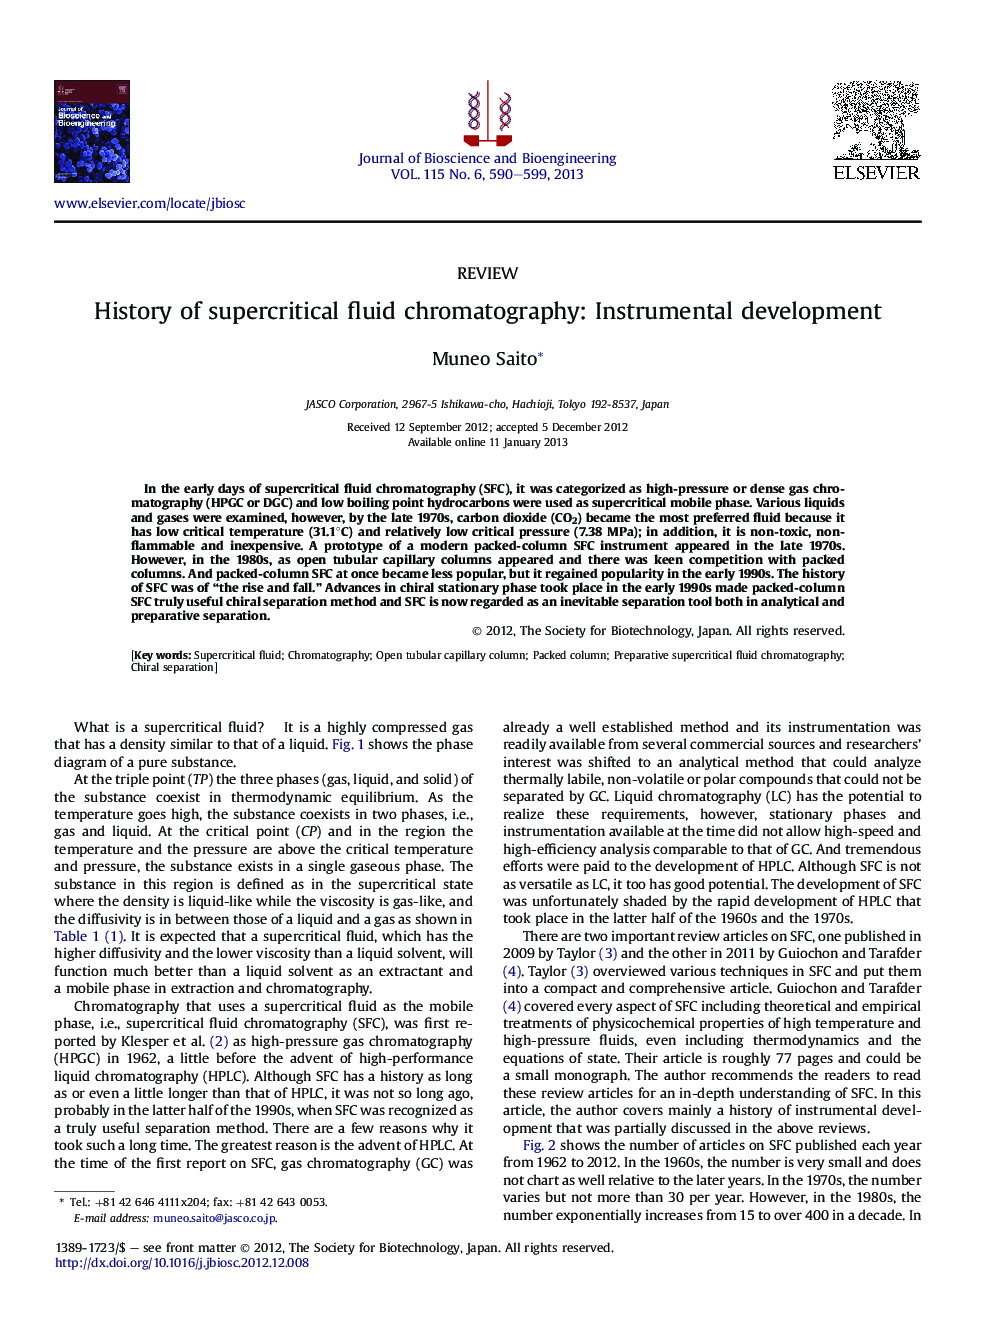 History of supercritical fluid chromatography: Instrumental development